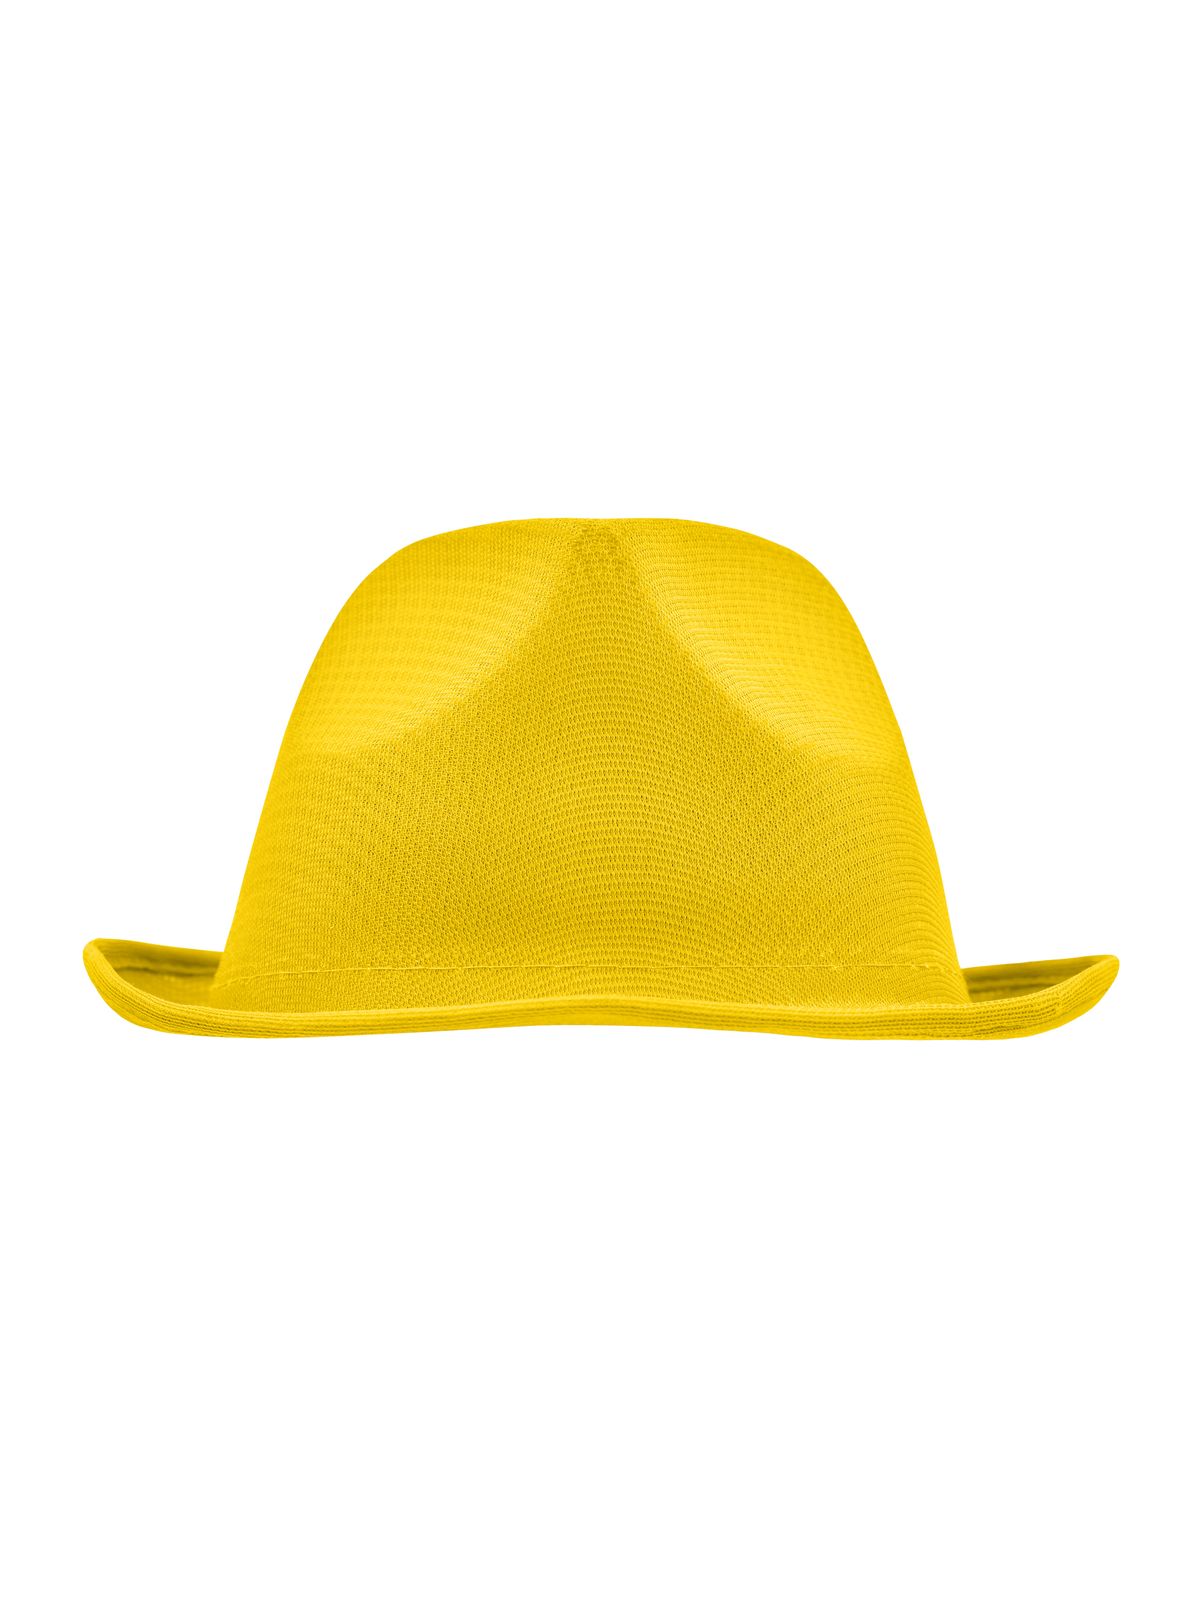 promotion-hat-sun-yellow.webp